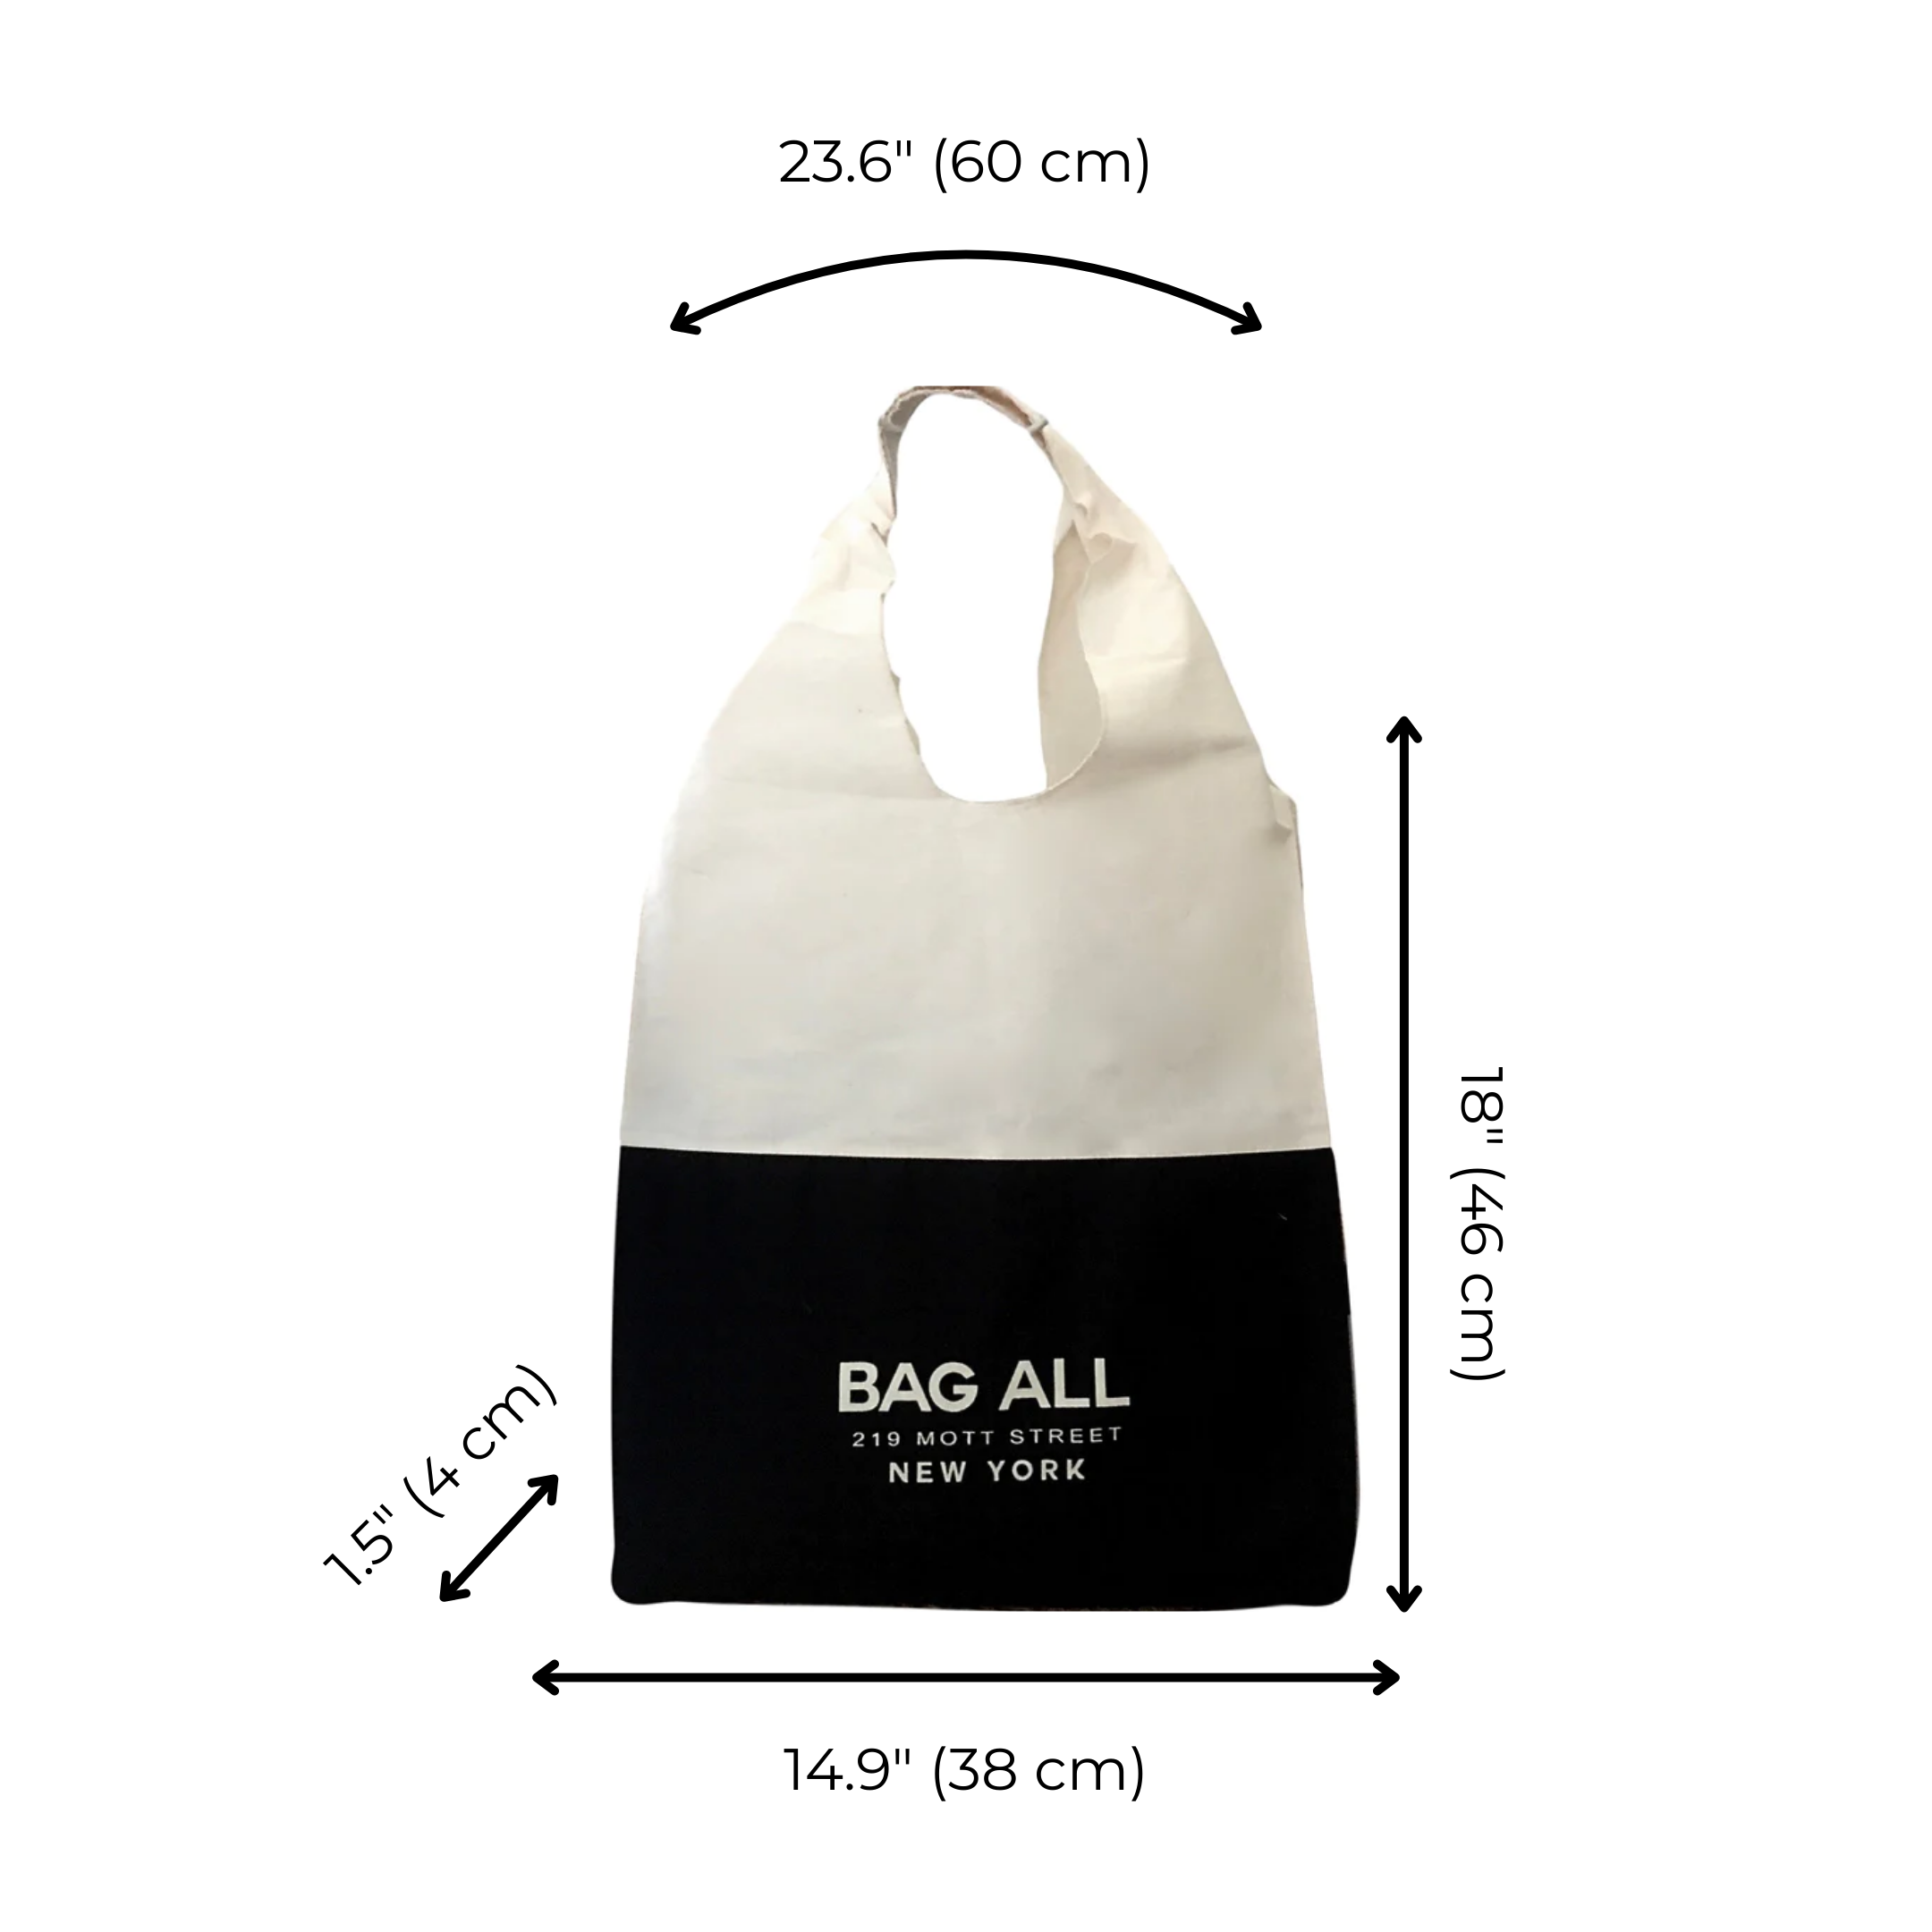 Bag-all Two Tone Tote Bag NYC, Cream | Bag-all